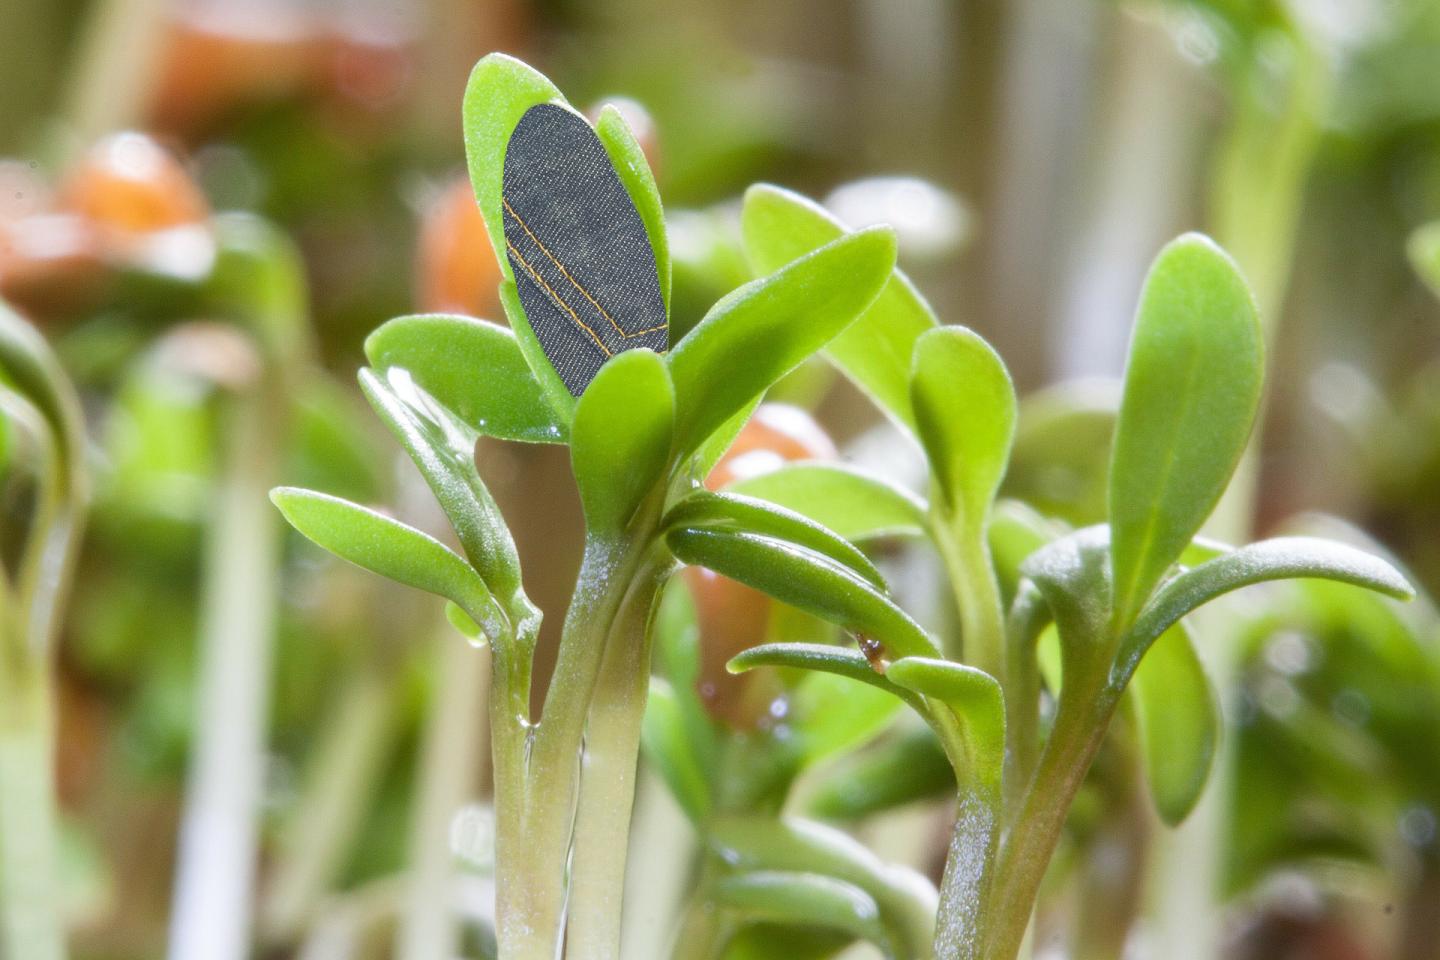 Blue Gene Regulation Helps Plants Respond Properly to Light